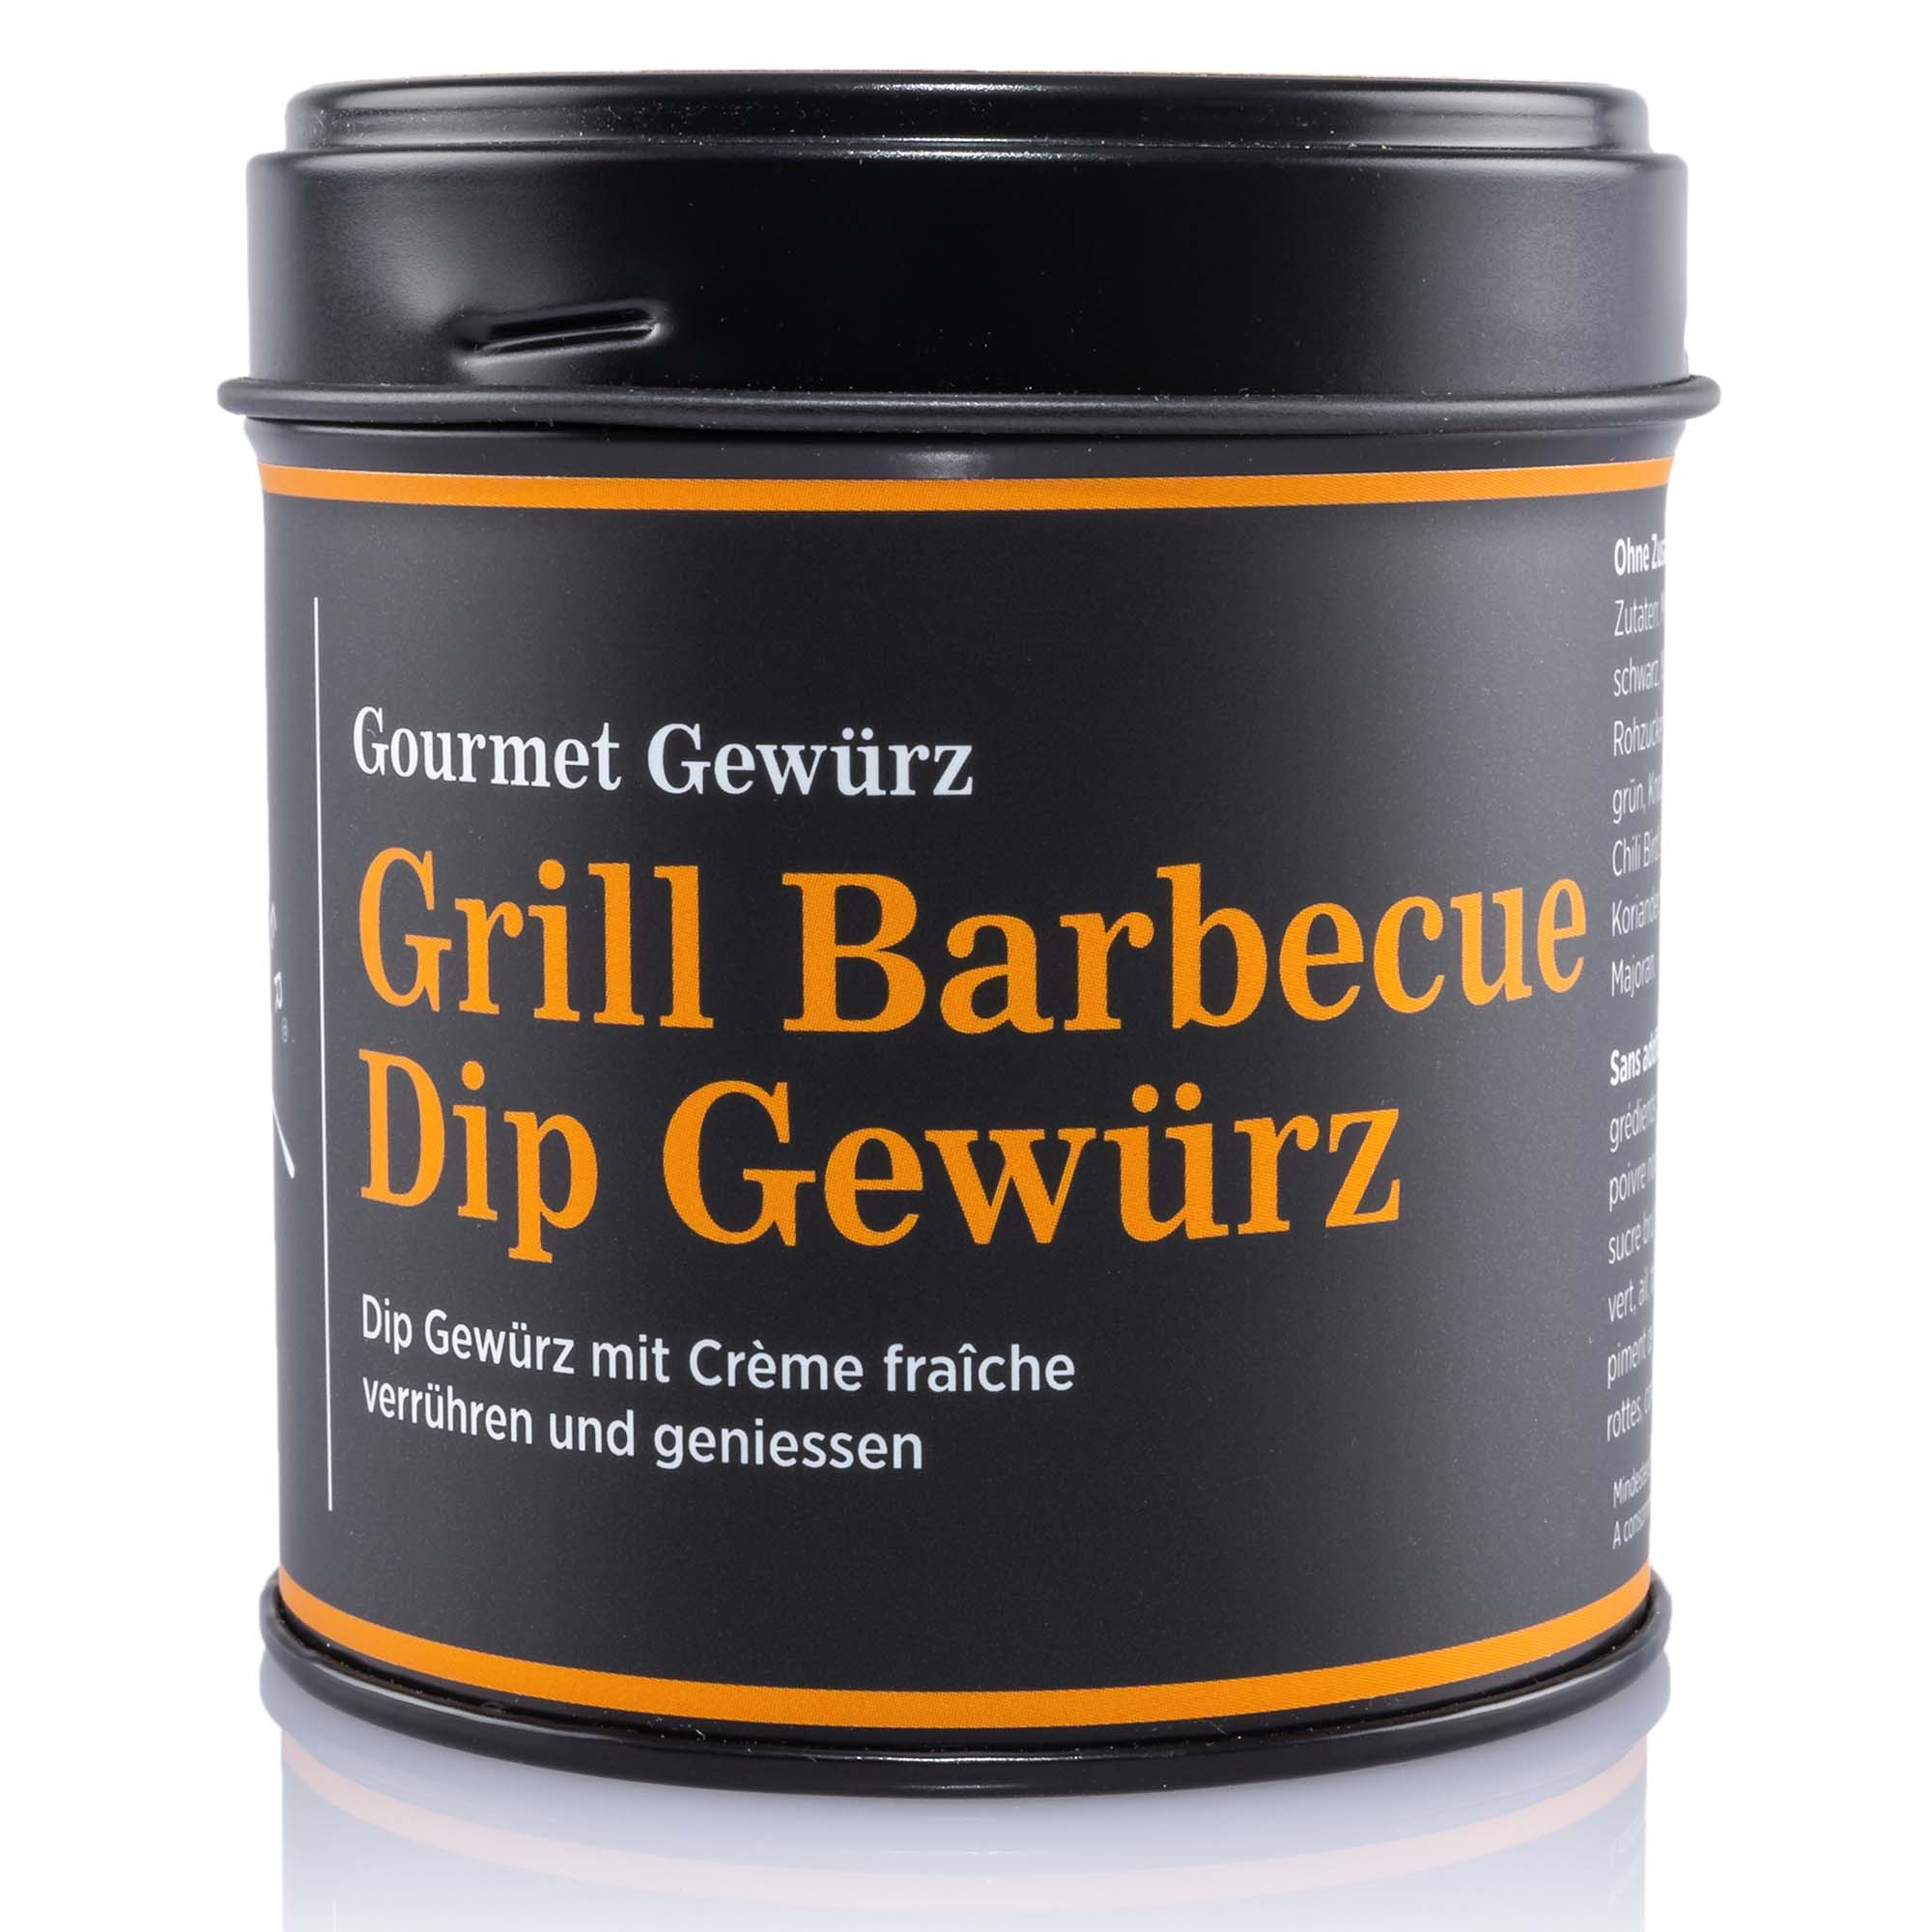 Grill Barbecue Dip Gewürz, 80g